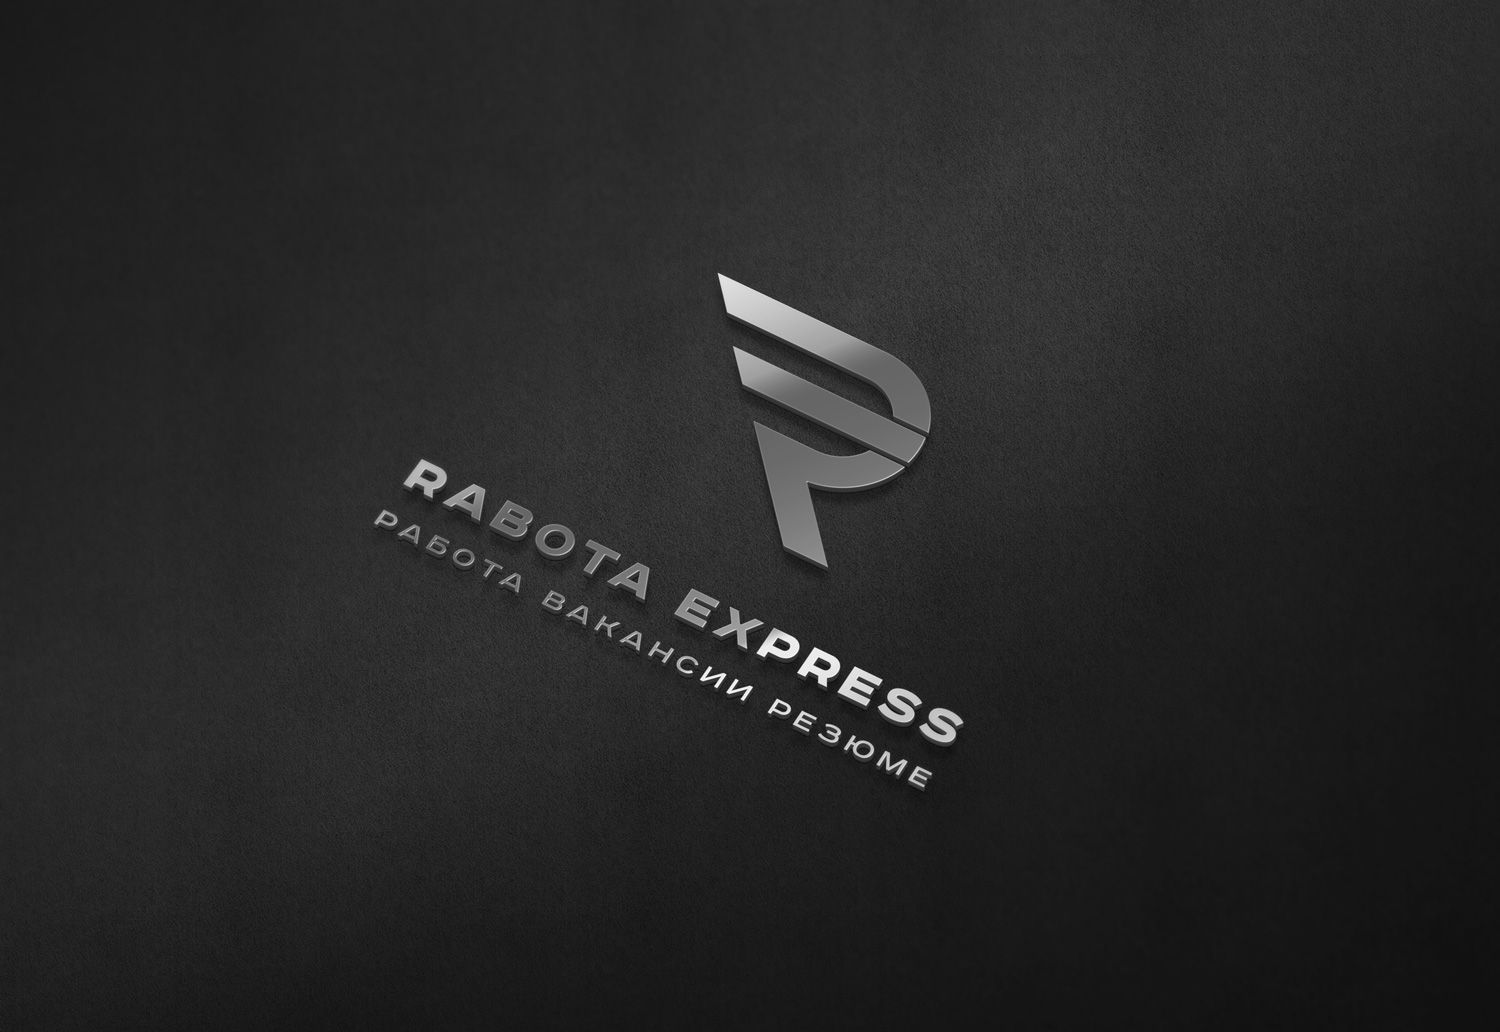 Логотип для RabotaExpress.ru (победителю - бонус) - дизайнер spawnkr